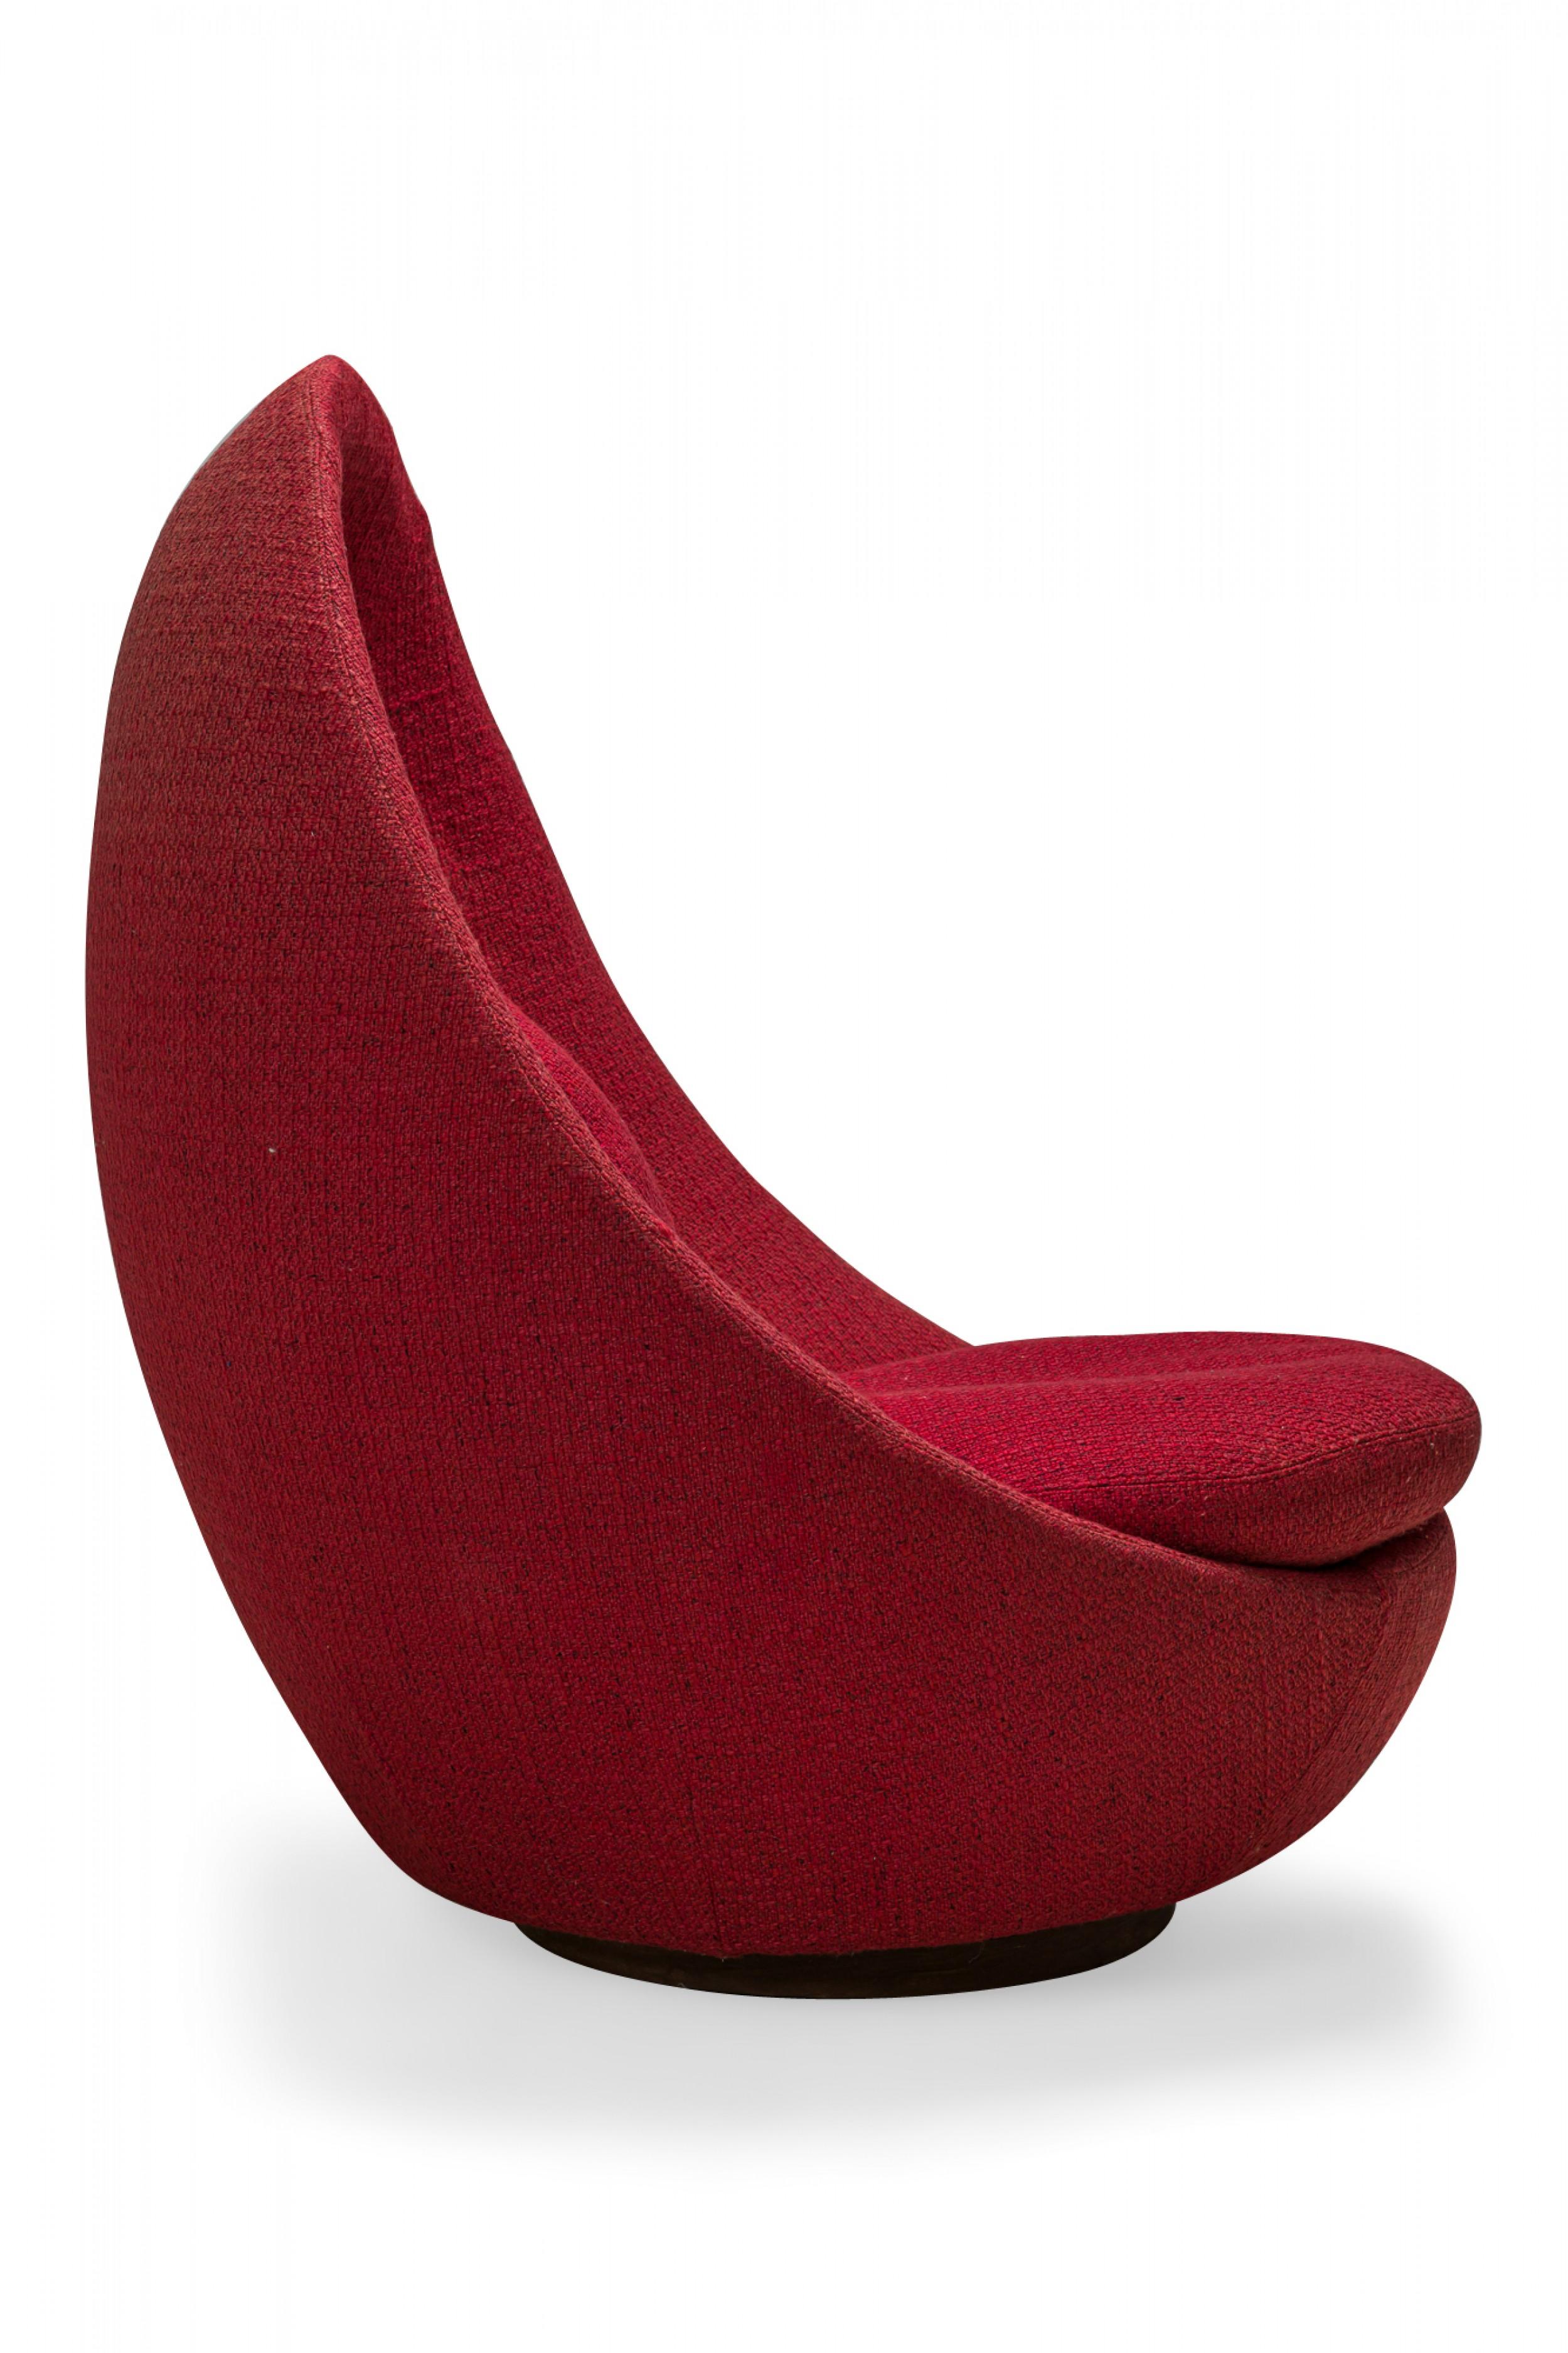 mid-century modern egg chair -china -b2b -forum -blog -wikipedia -.cn -.gov -alibaba